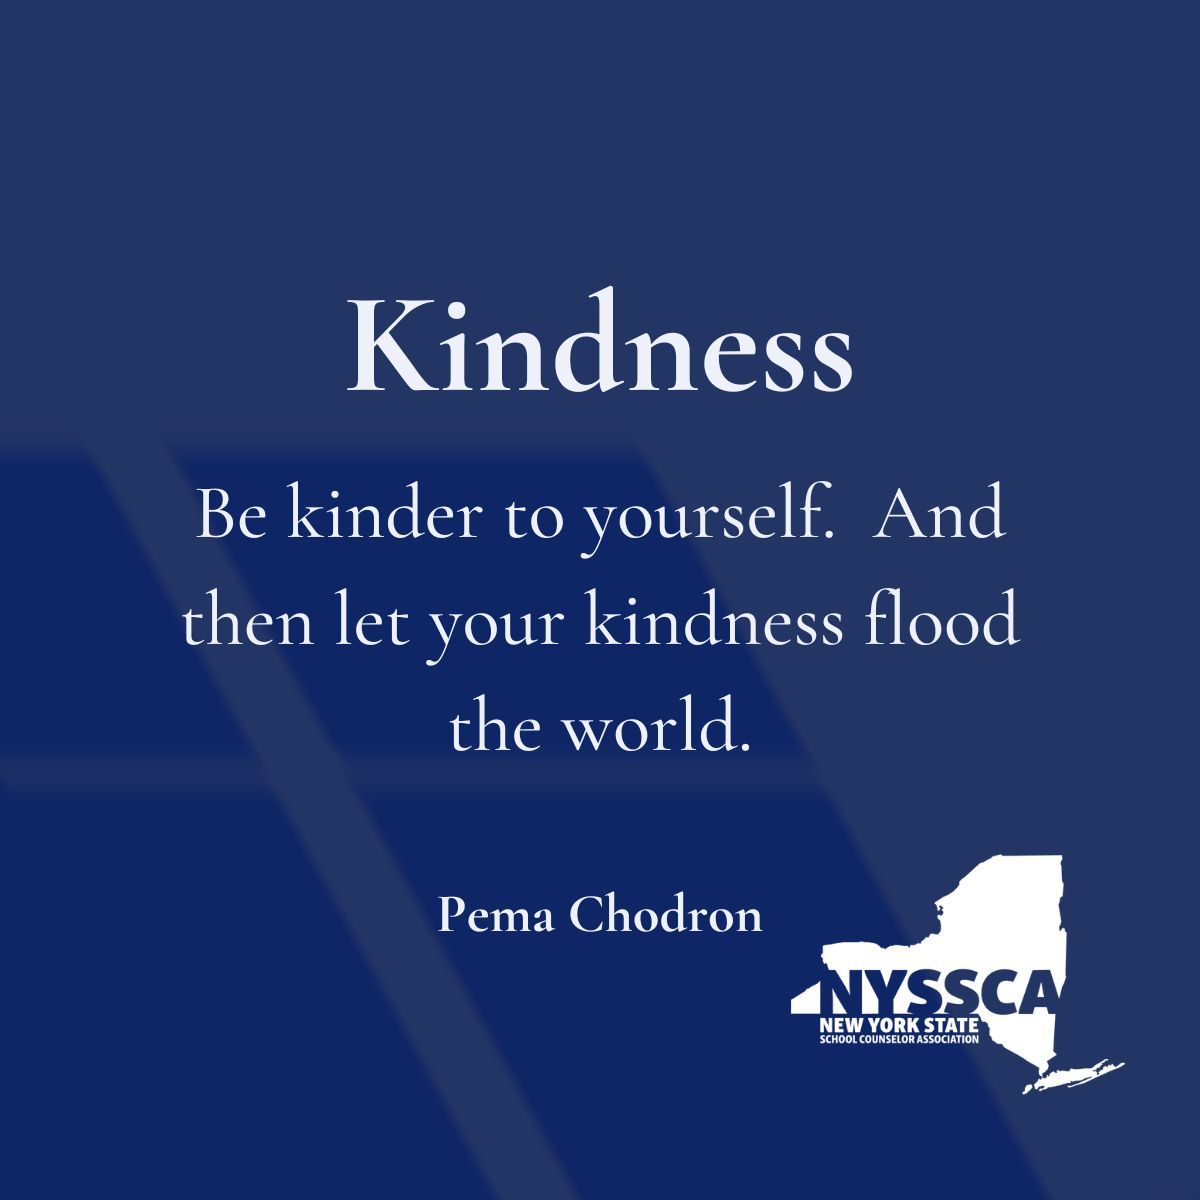 #Kindness #SchoolCounselor #NYSSCA #Education #Happy #WhatMovesYou #BeKind #KindnessWins